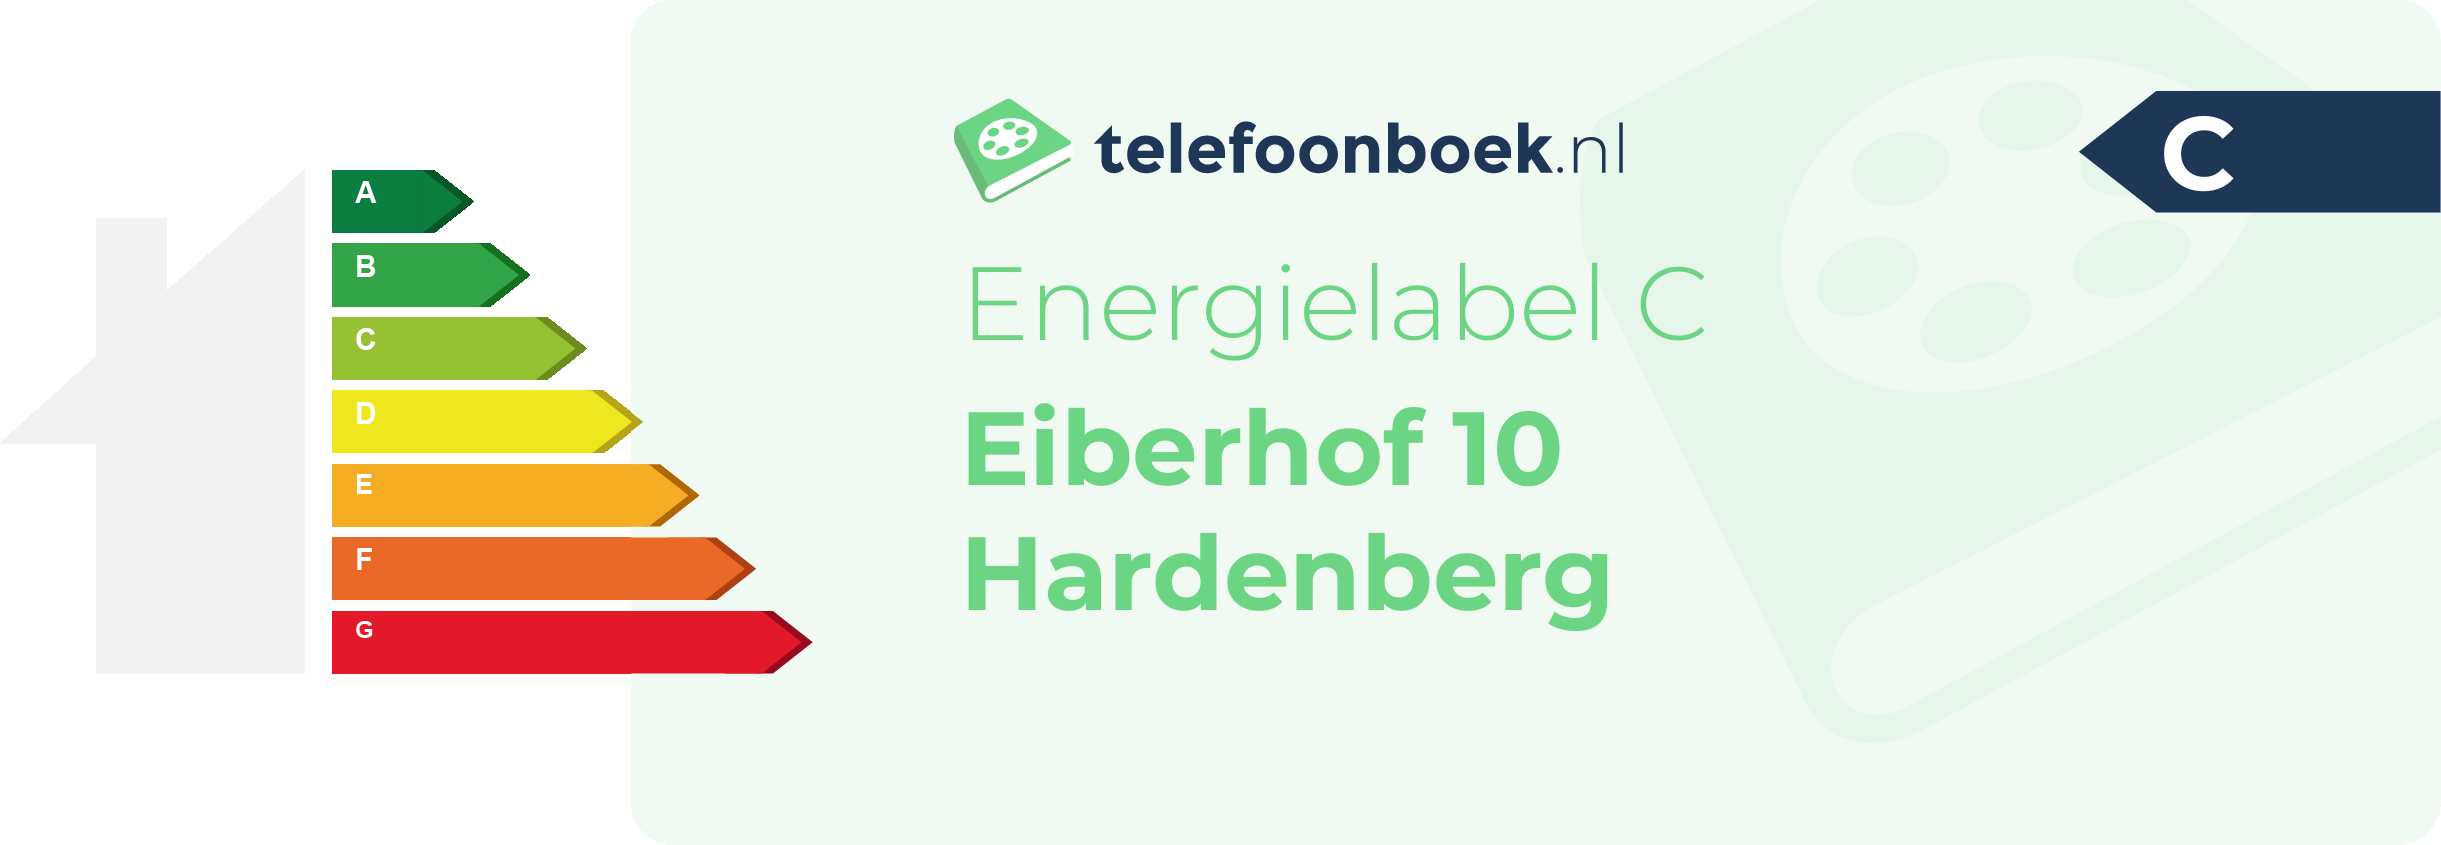 Energielabel Eiberhof 10 Hardenberg